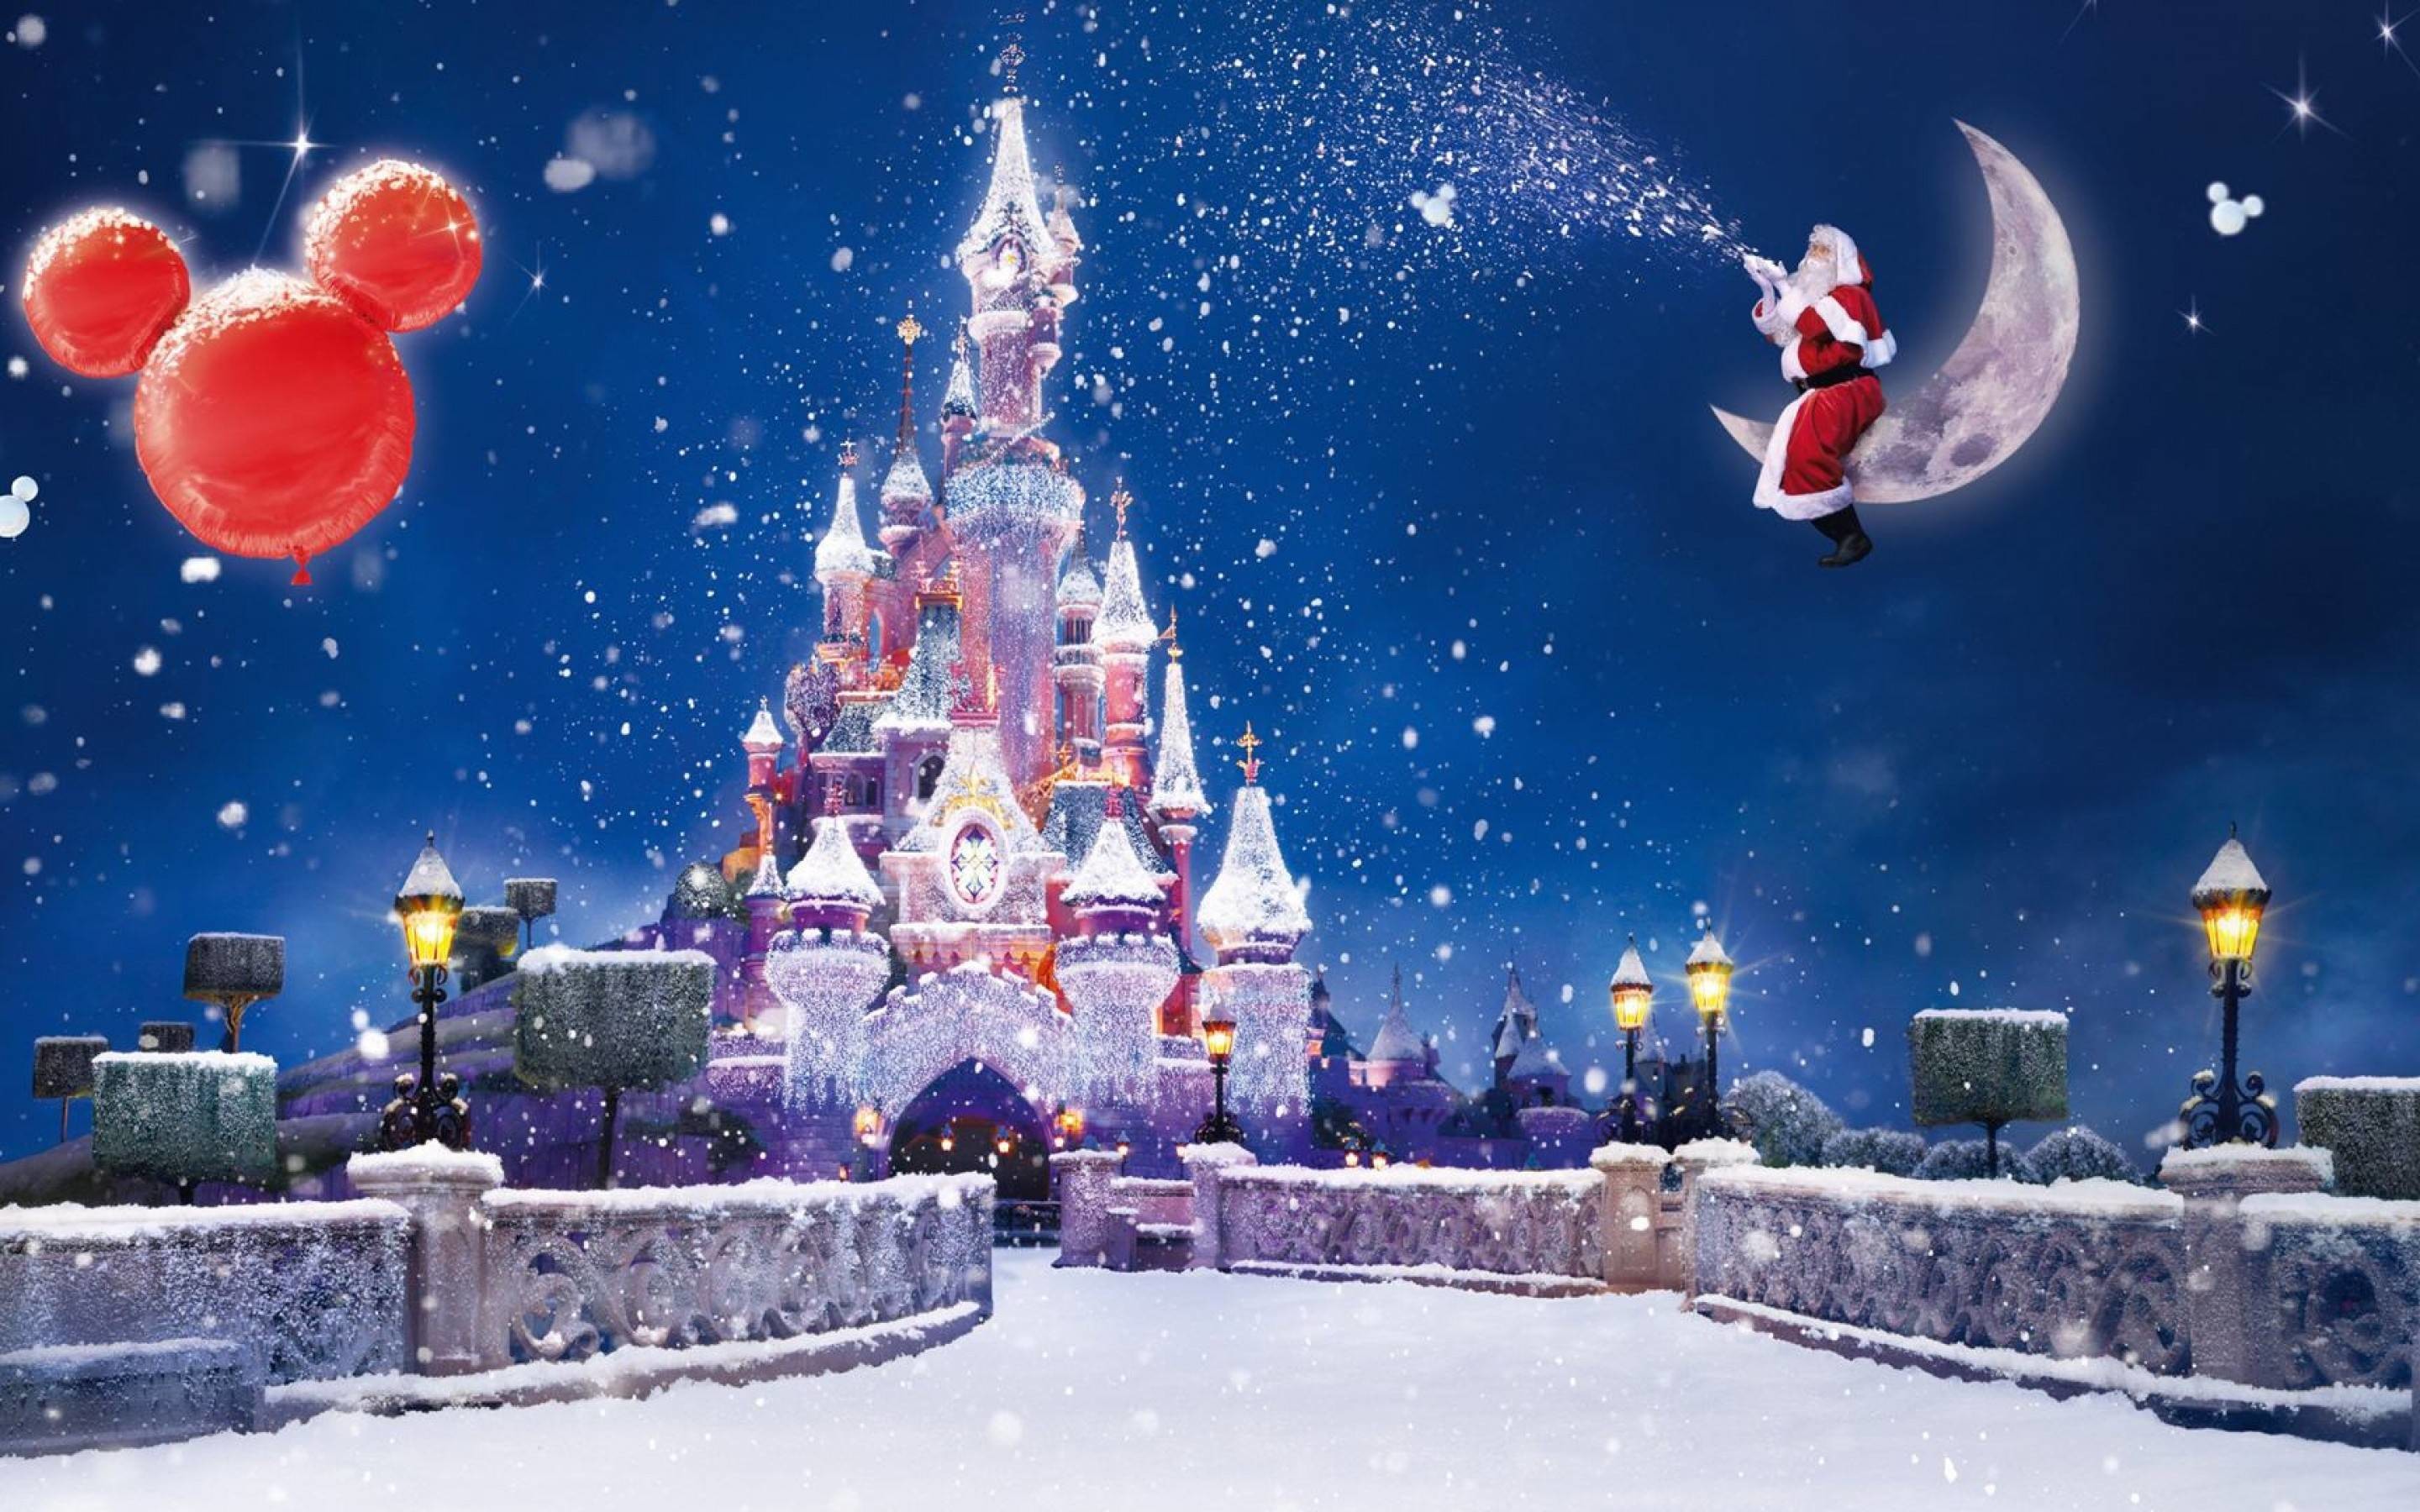 Disney Christmas Wallpaper And Screensavers Image